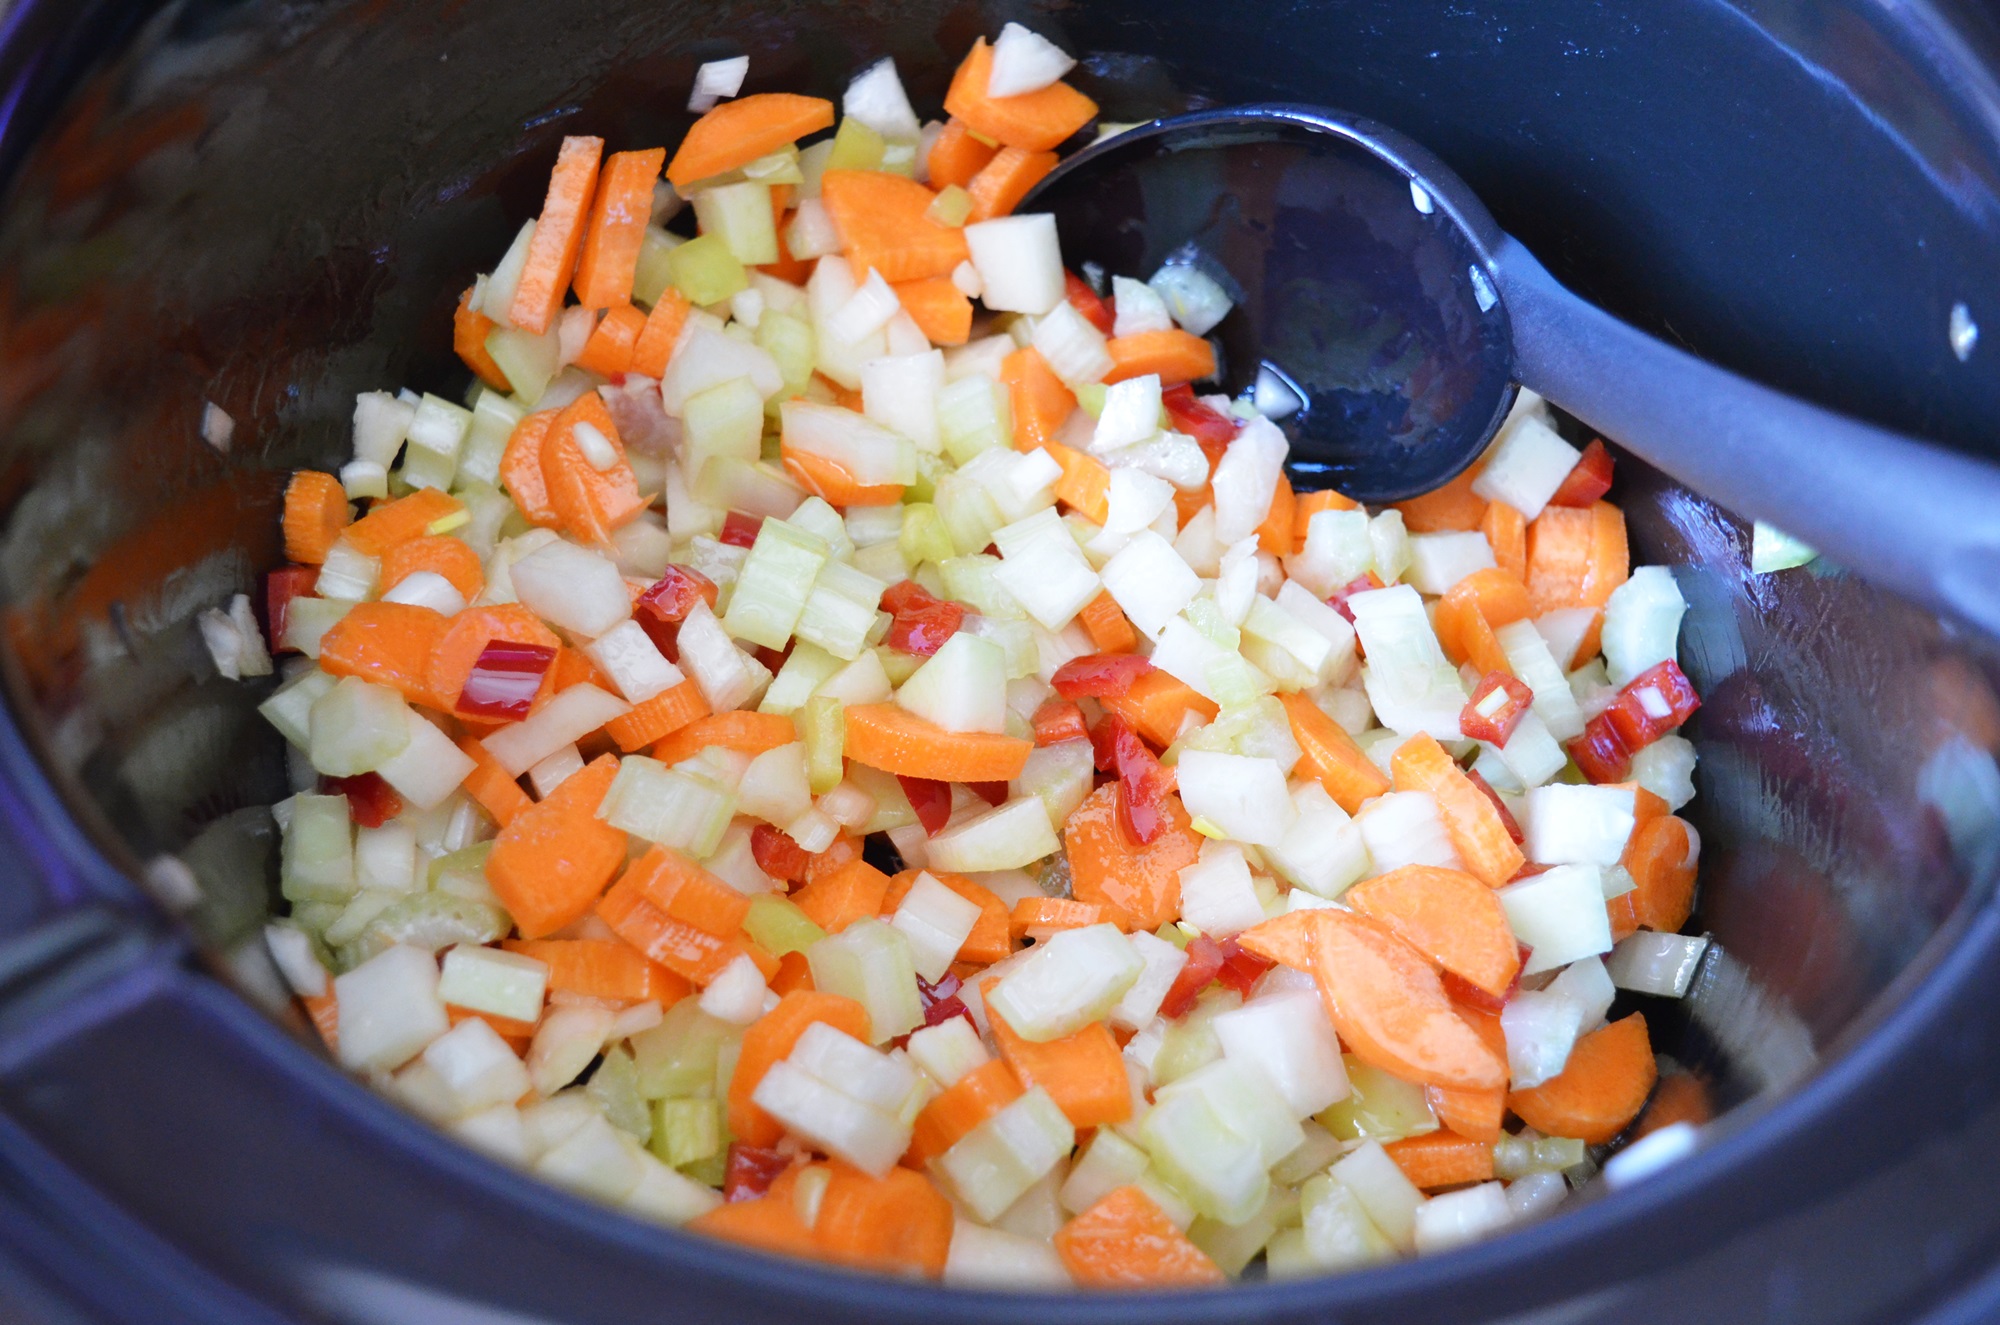 Ciorba de legume la slow cooker Crock-Pot